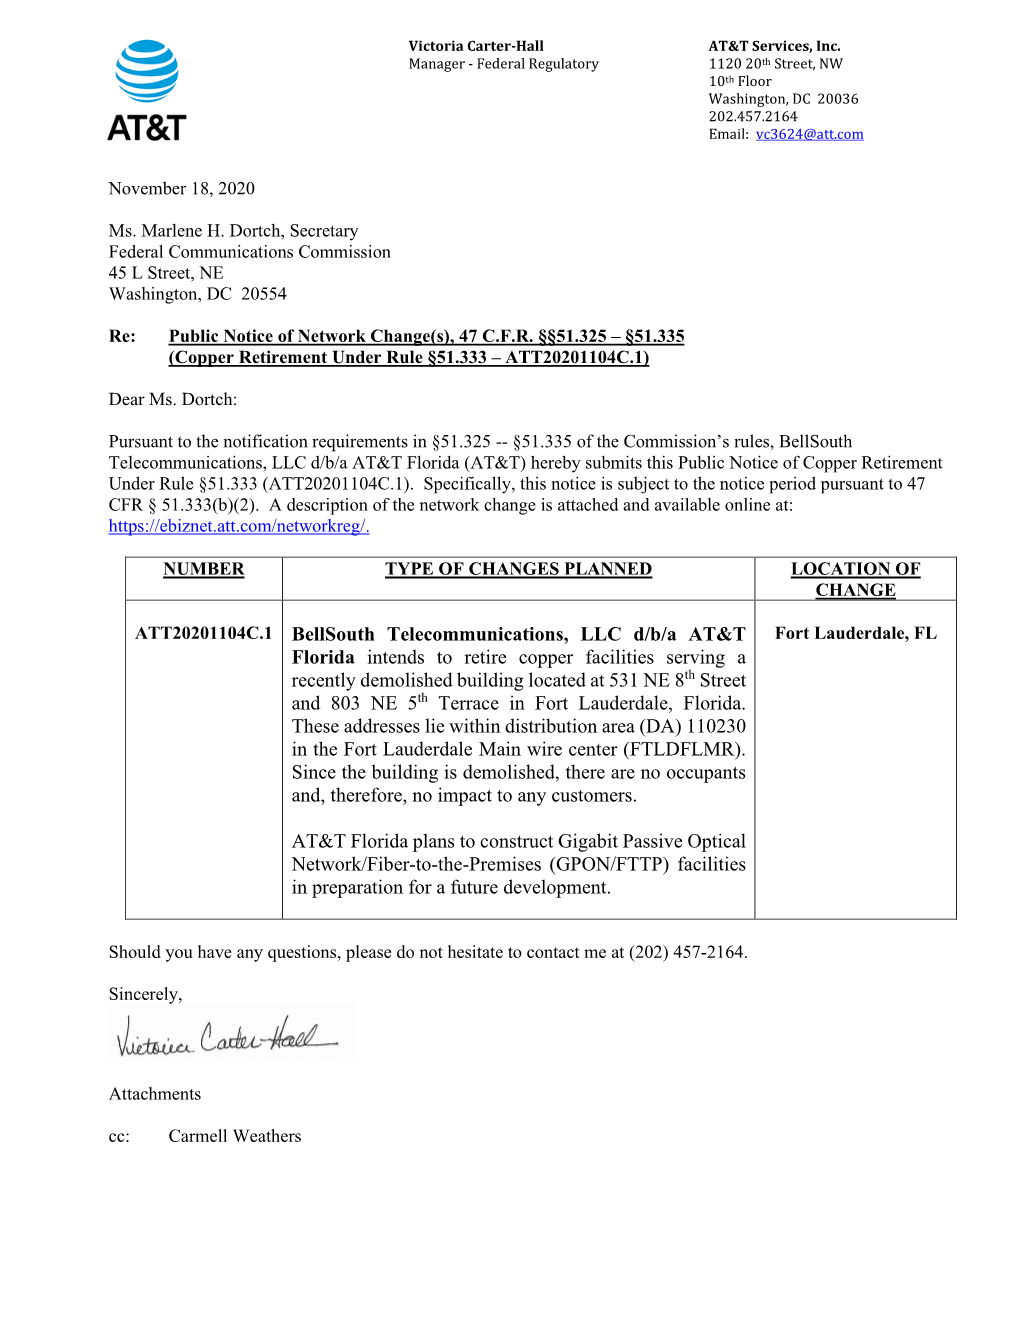 ATT20201104C.1 Bellsouth Telecommunications, LLC D/B/A AT&T